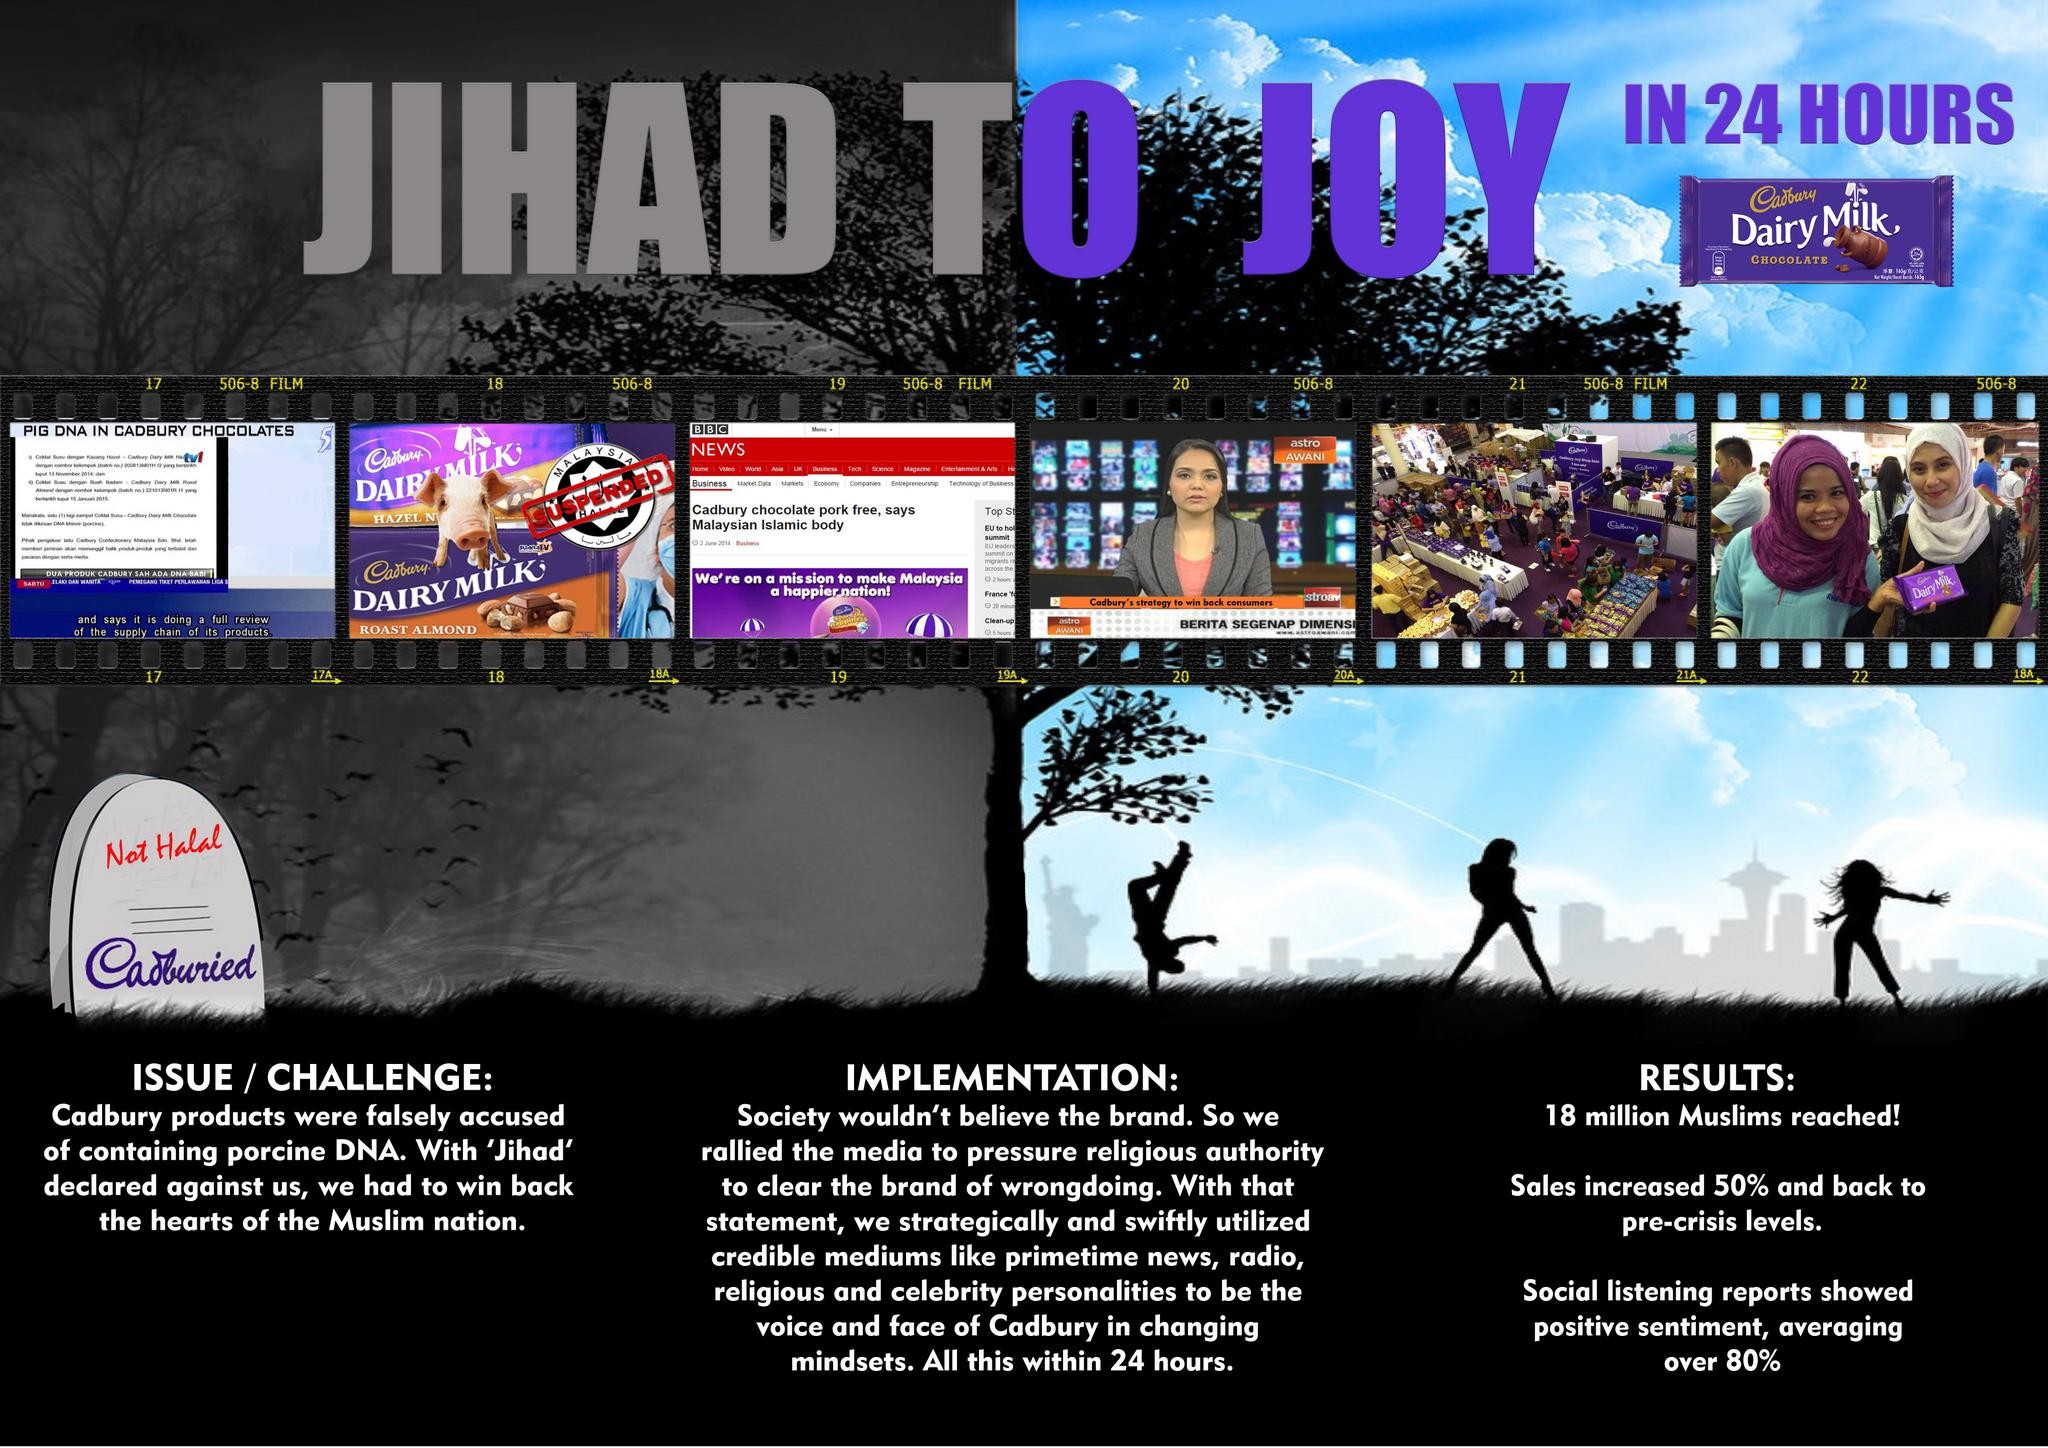 FROM JIHAD* TO JOY IN 24 HOURS (*JIHAD: HOLY WAR)